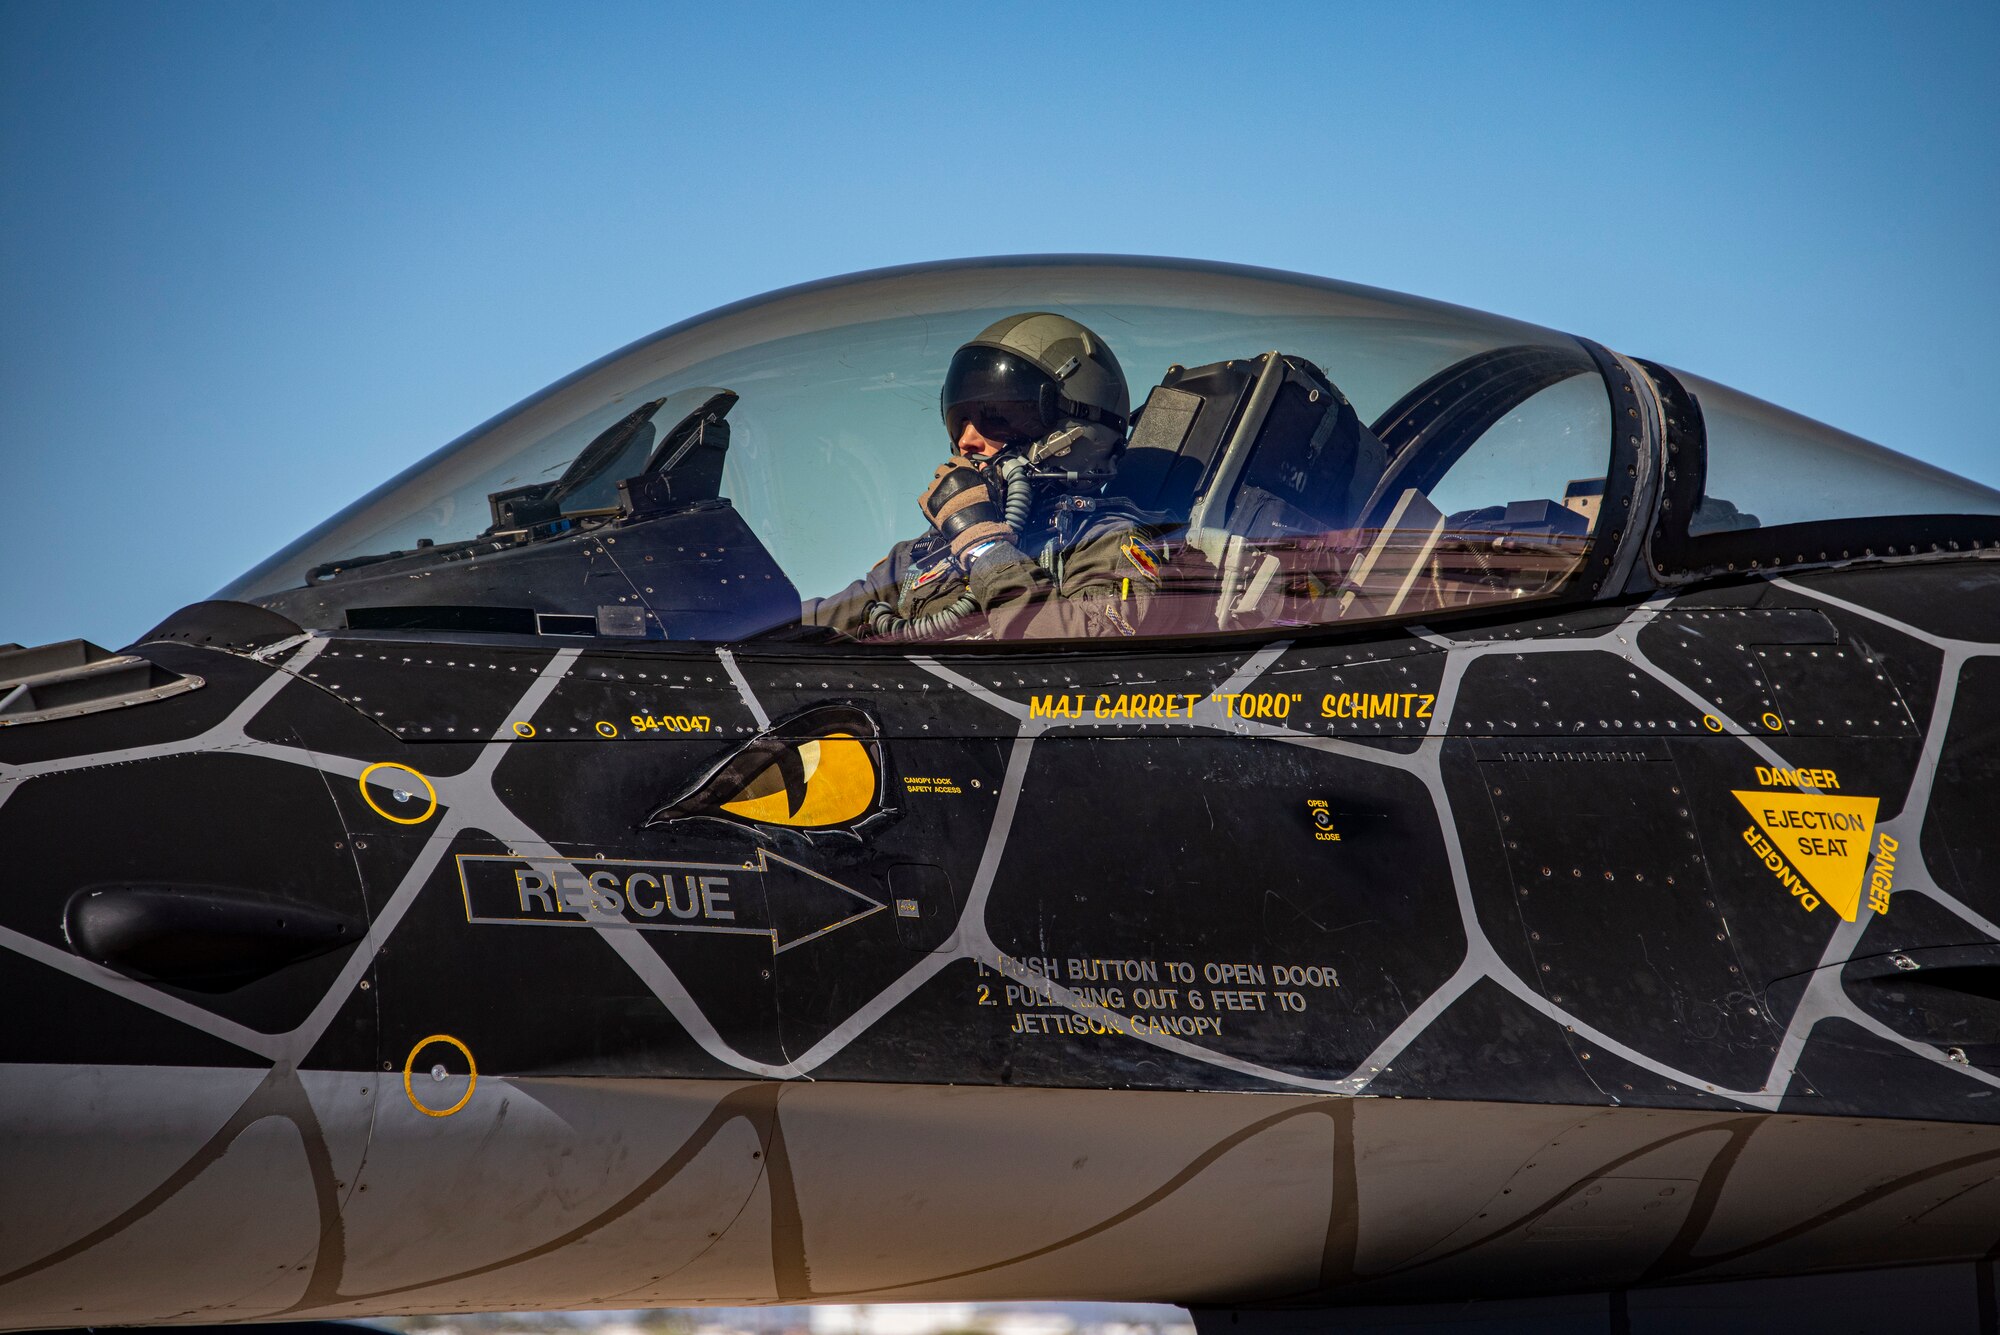 An Airmen in a plane's cockpit.